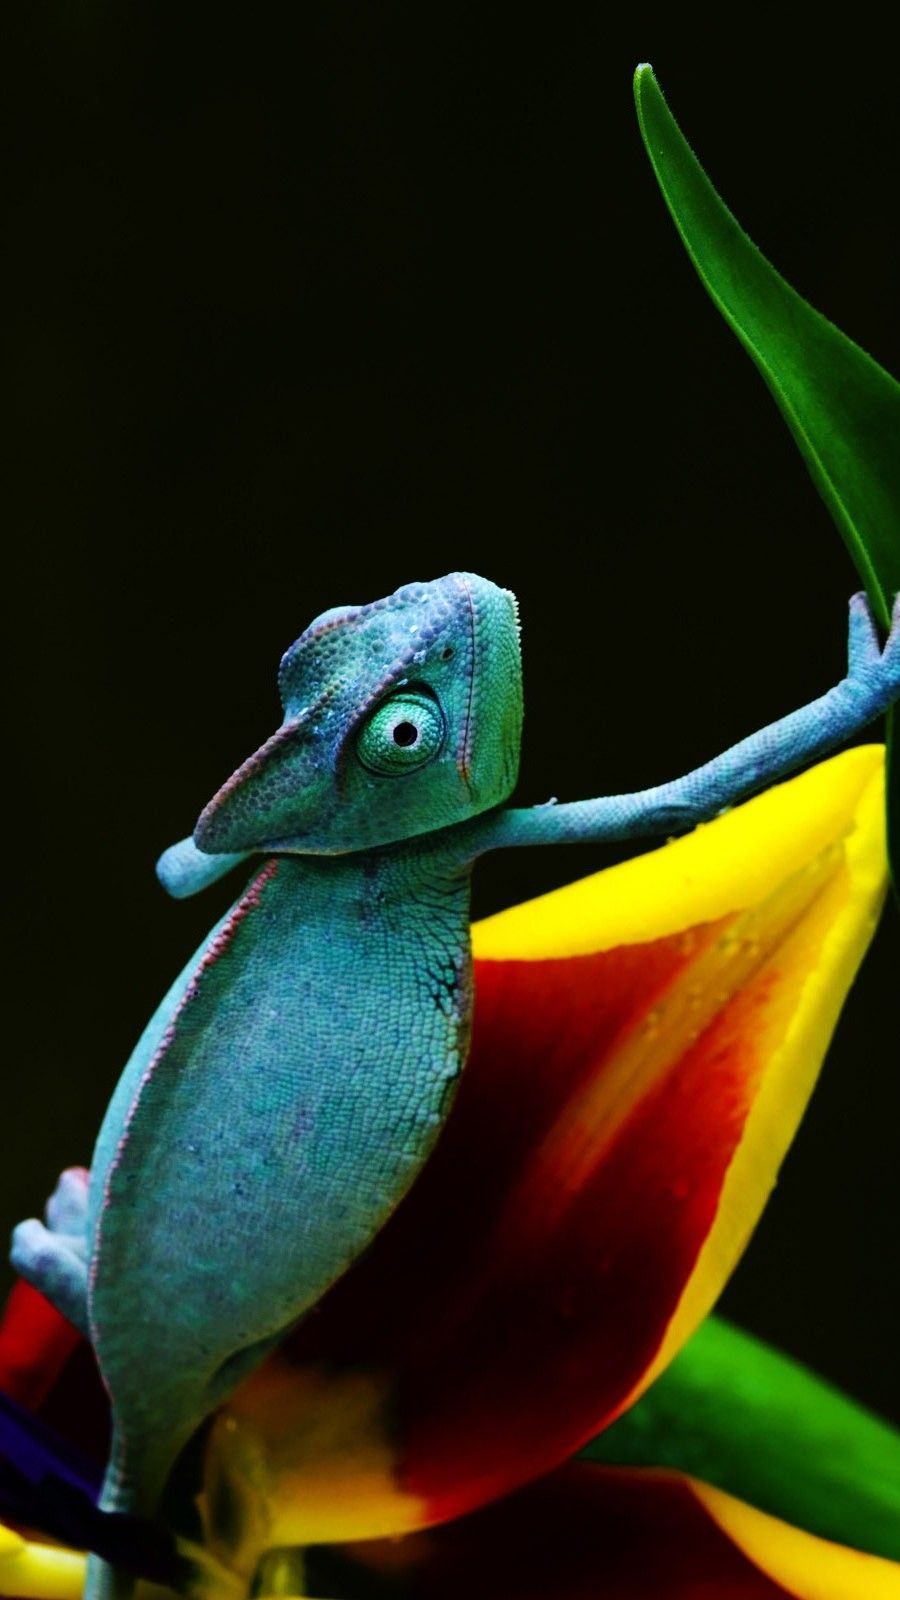 Cool Blue Chameleon Wallpaper iPhone Reptiles Best